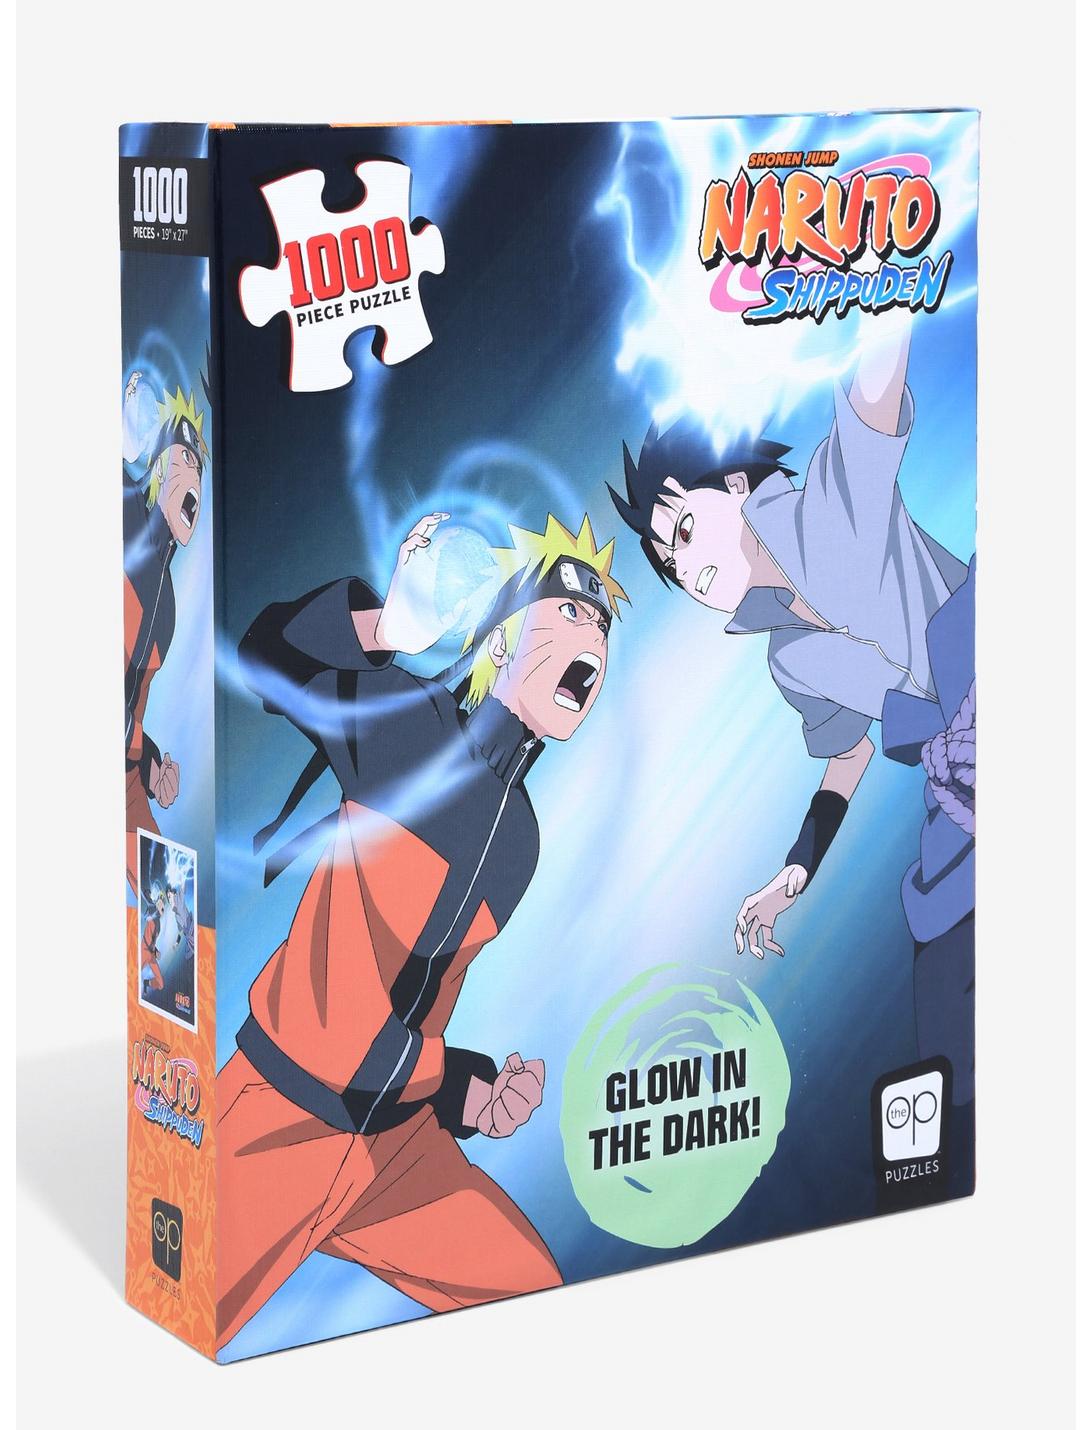 Naruto Shippuden Naruto & Sasuke Glow-in-the-Dark 1000-Piece Puzzle -  BoxLunch Exclusive